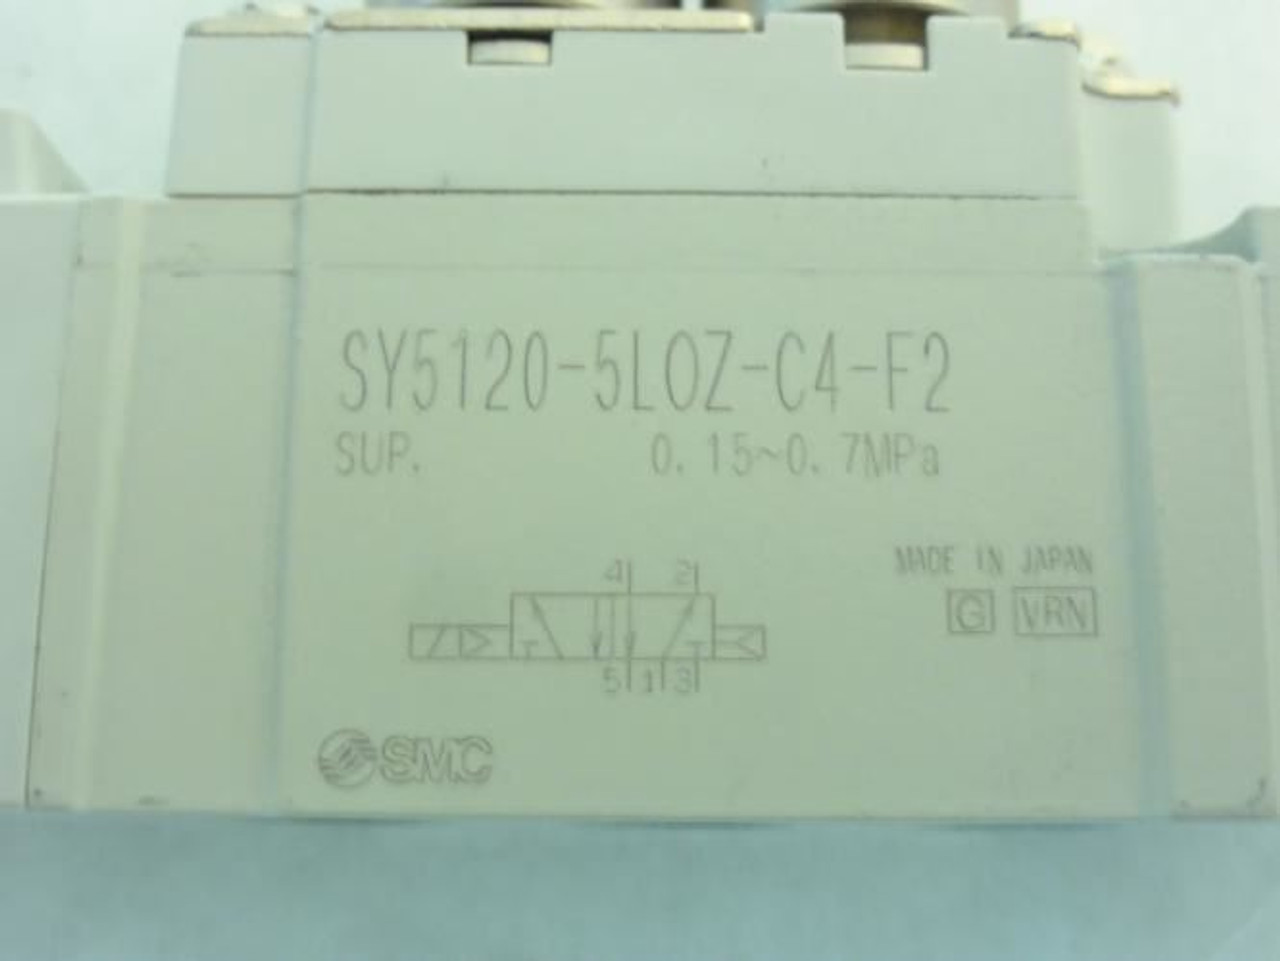 SMC SY5120-5LOZ-C4-F2; Solenoid Valve; 0.15-0.7MPa; Coil: 24VDC